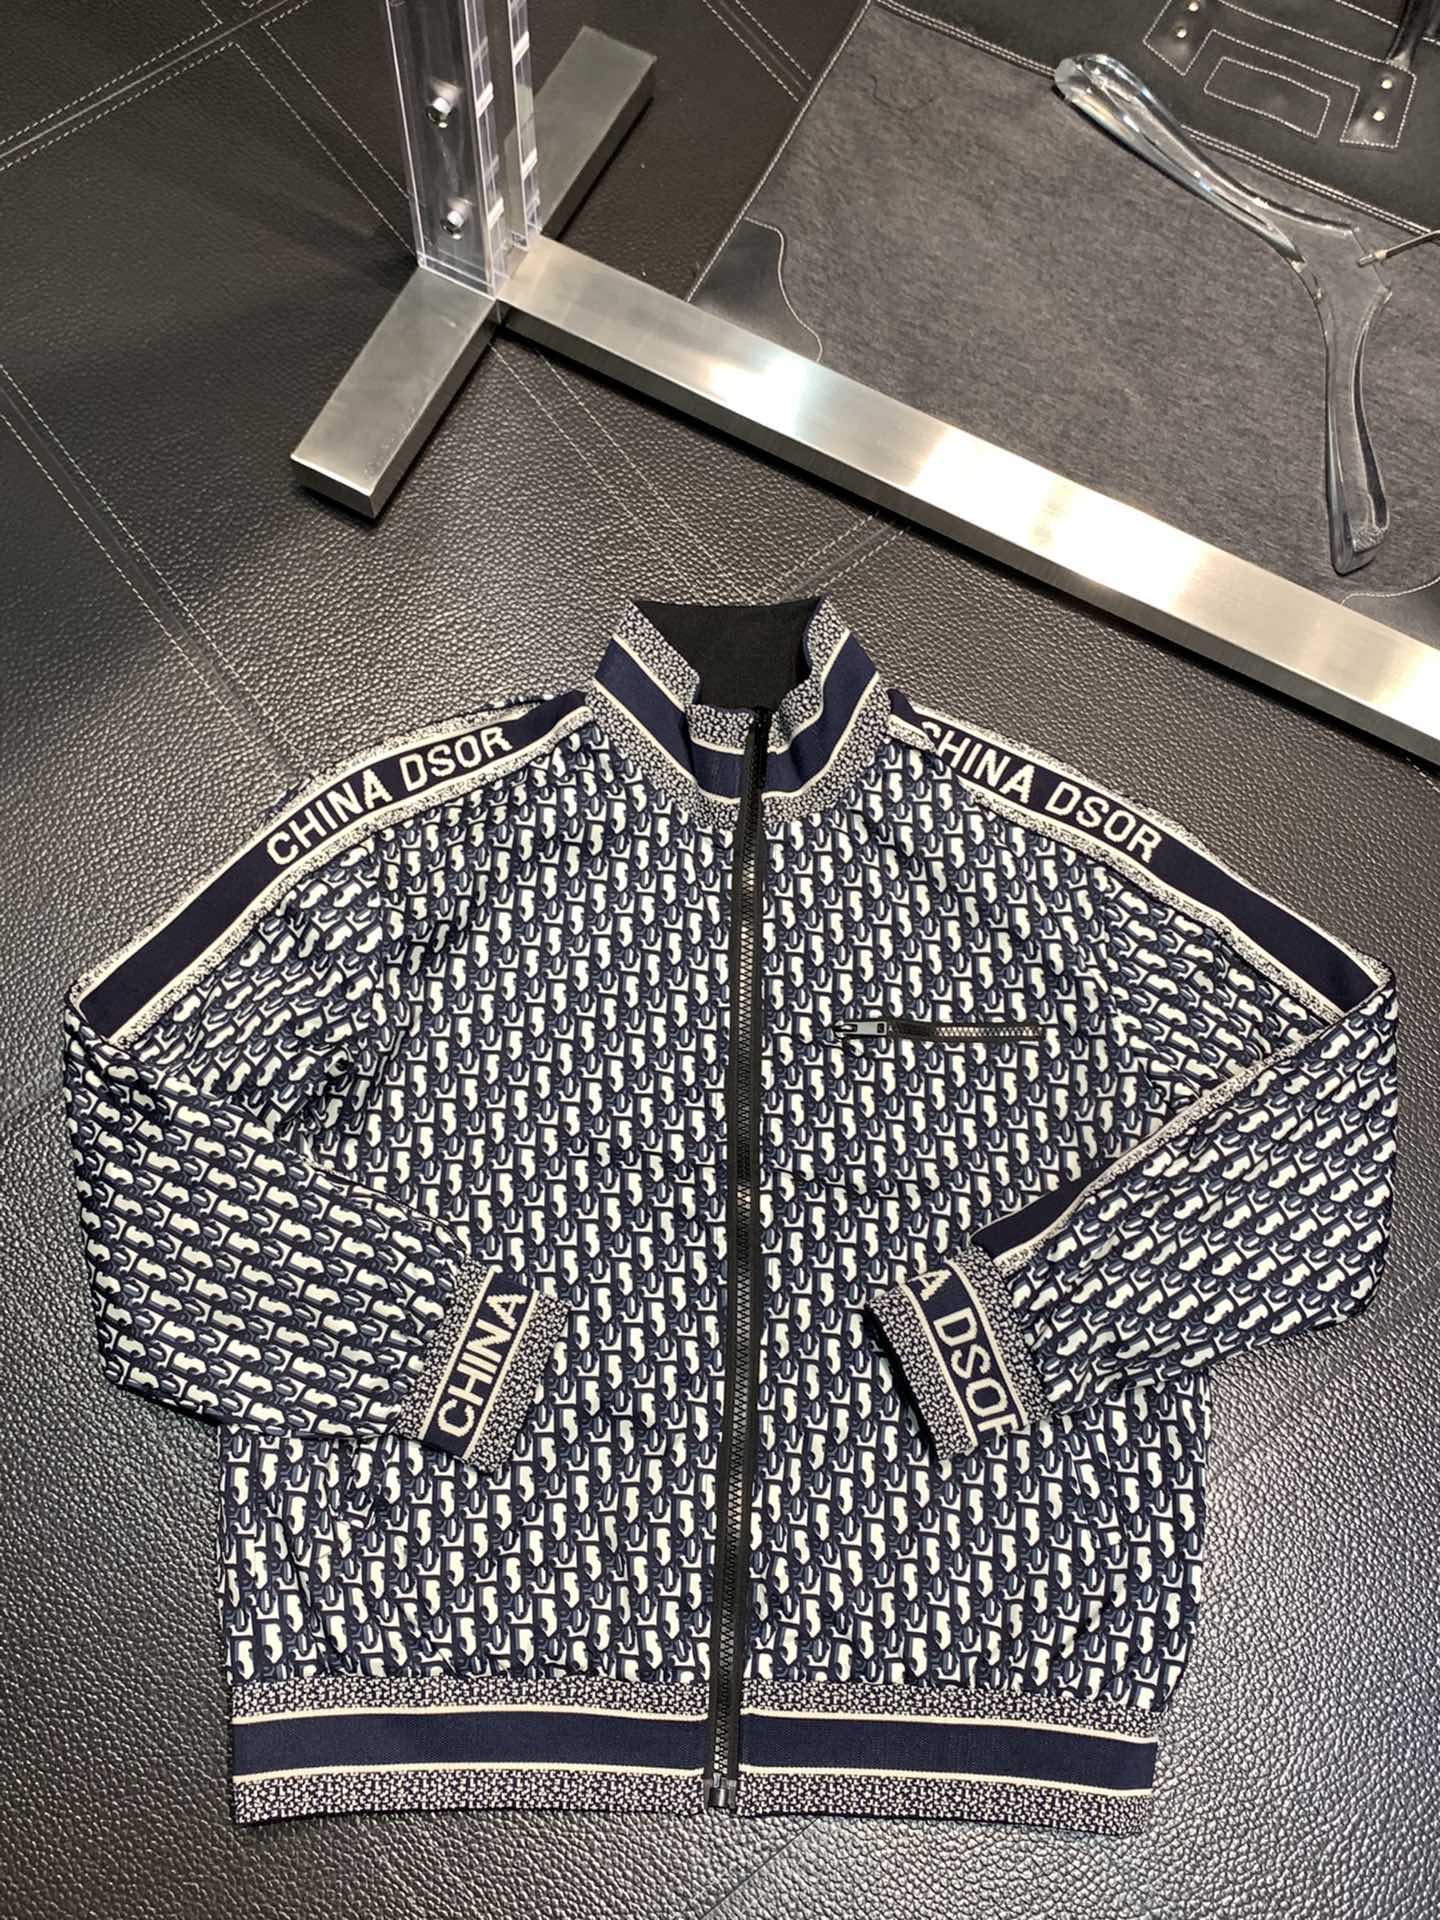 Dior迪奥独家专供最新春秋时尚立领夹克双面穿设计经典设计感与颜值爆棚的外套品质更是无法挑剔品控可以直接